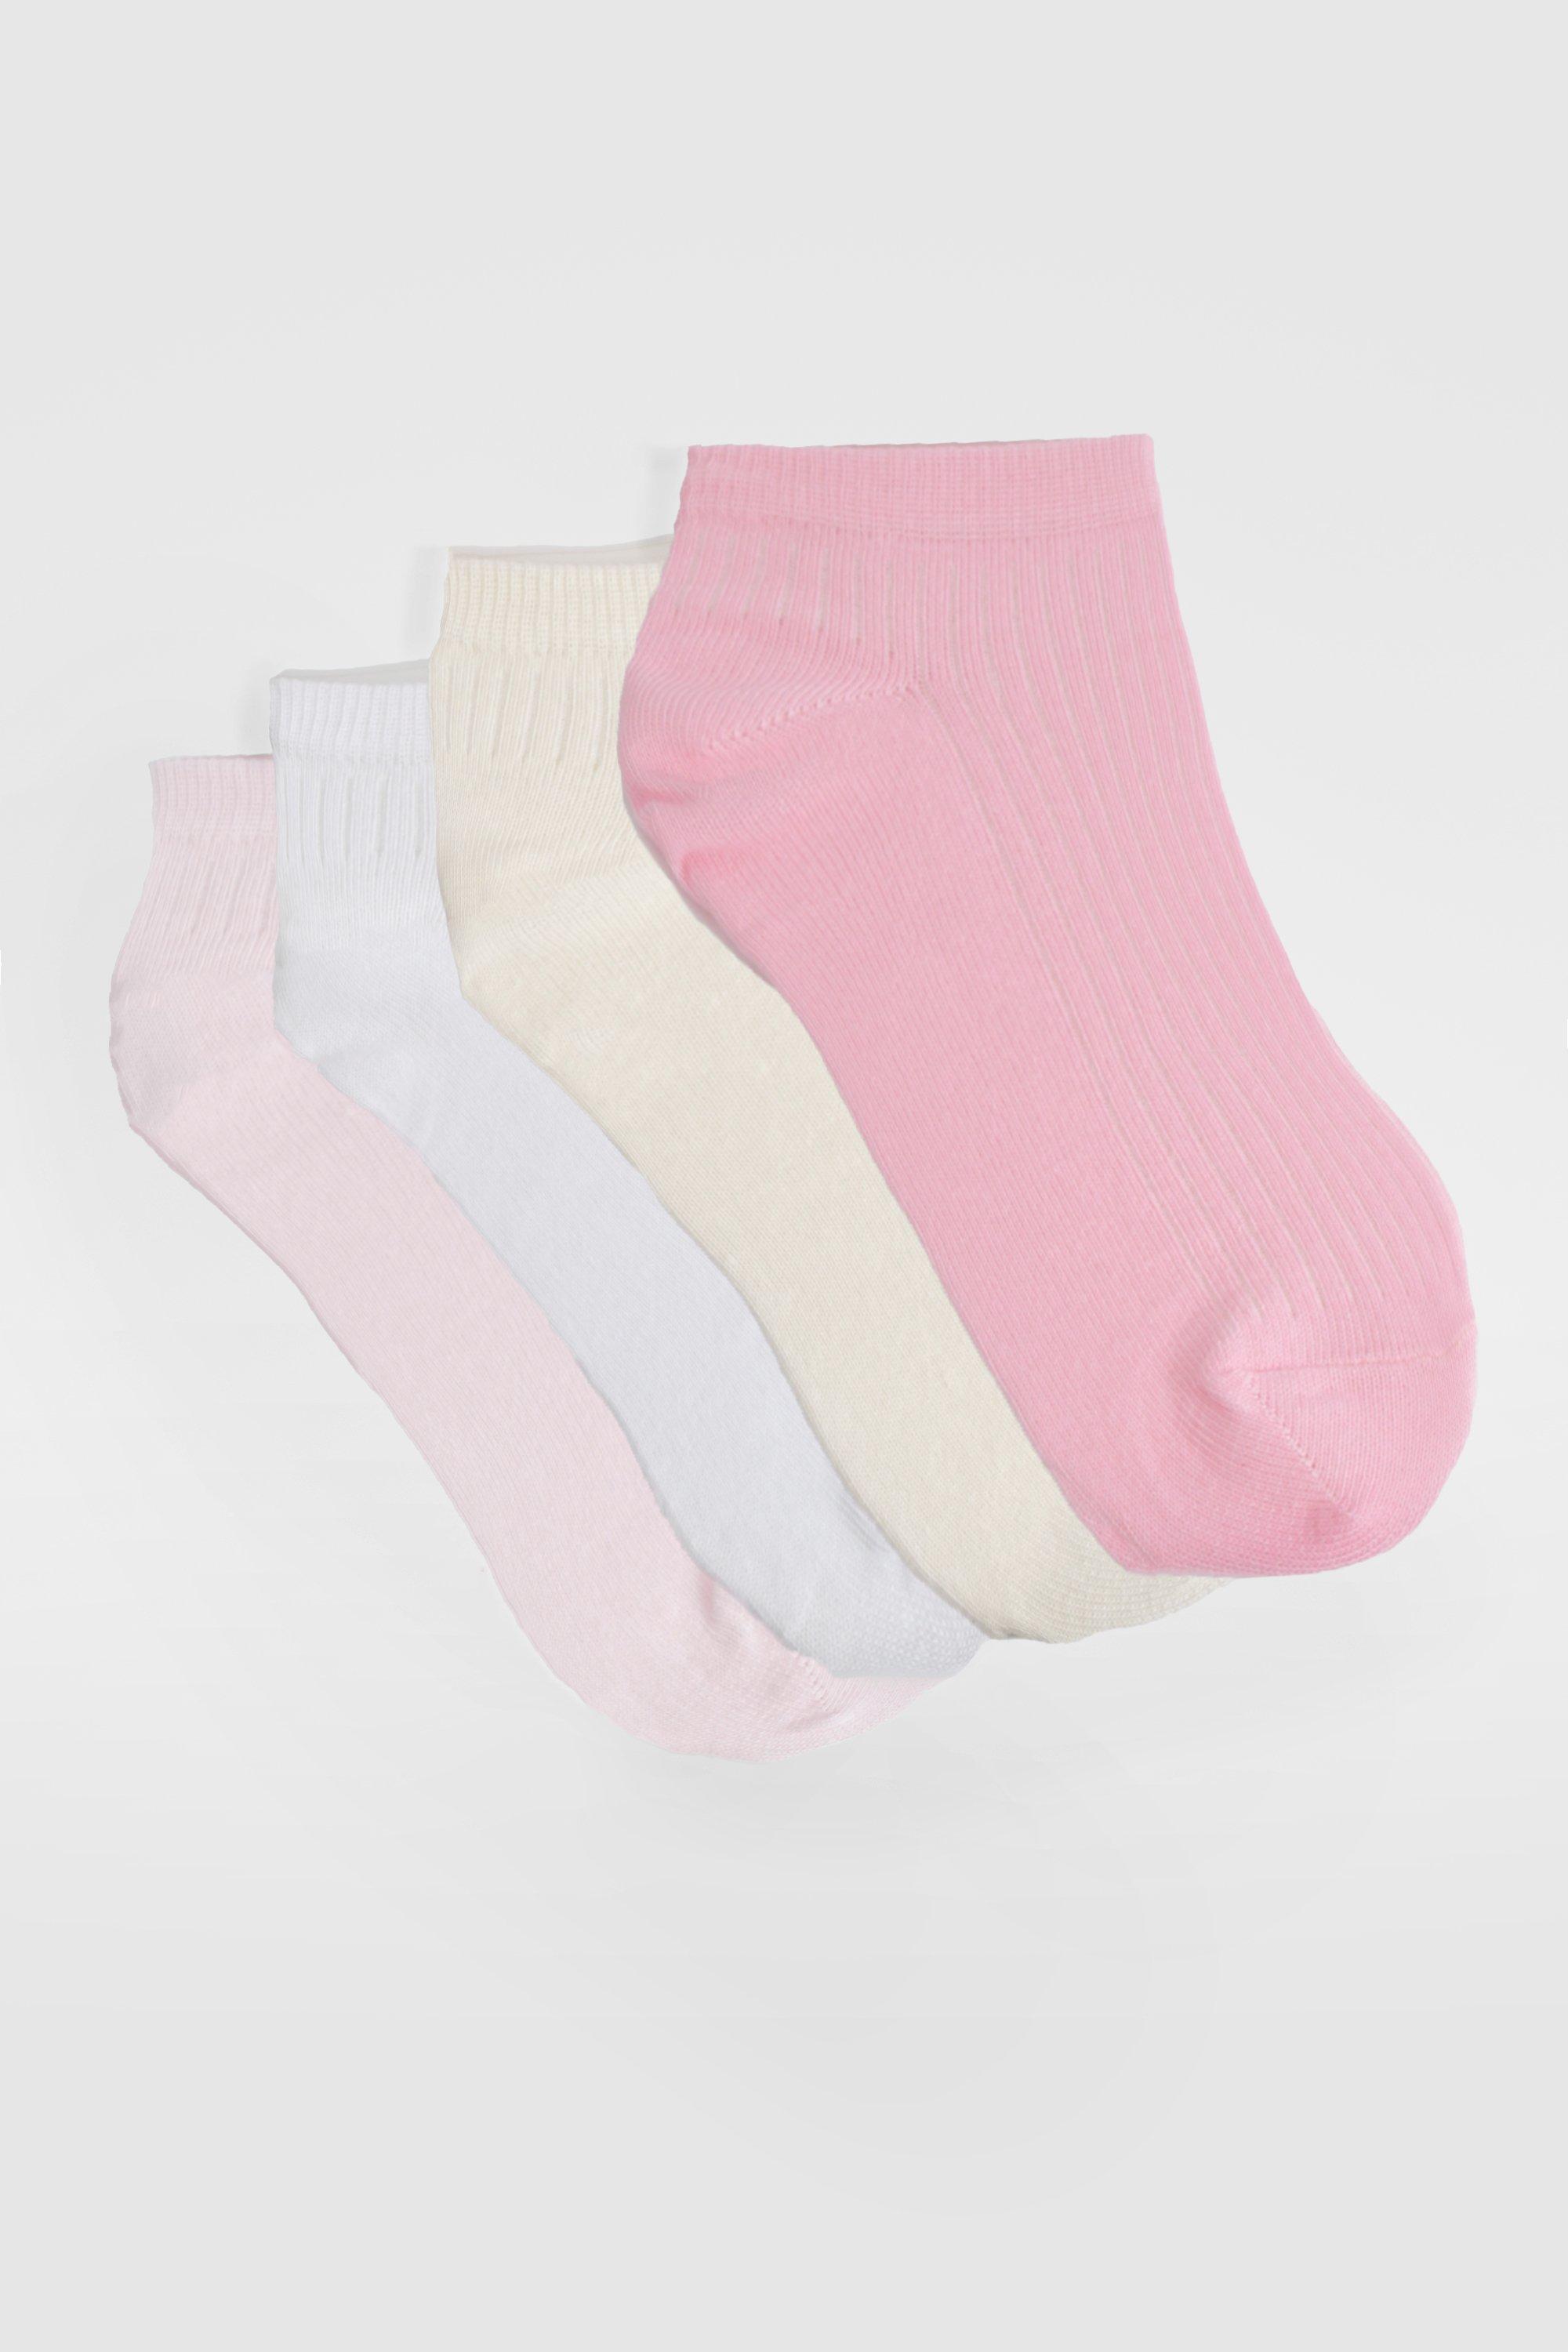 Image of 4 Pack Pink Trainer Socks, Pink